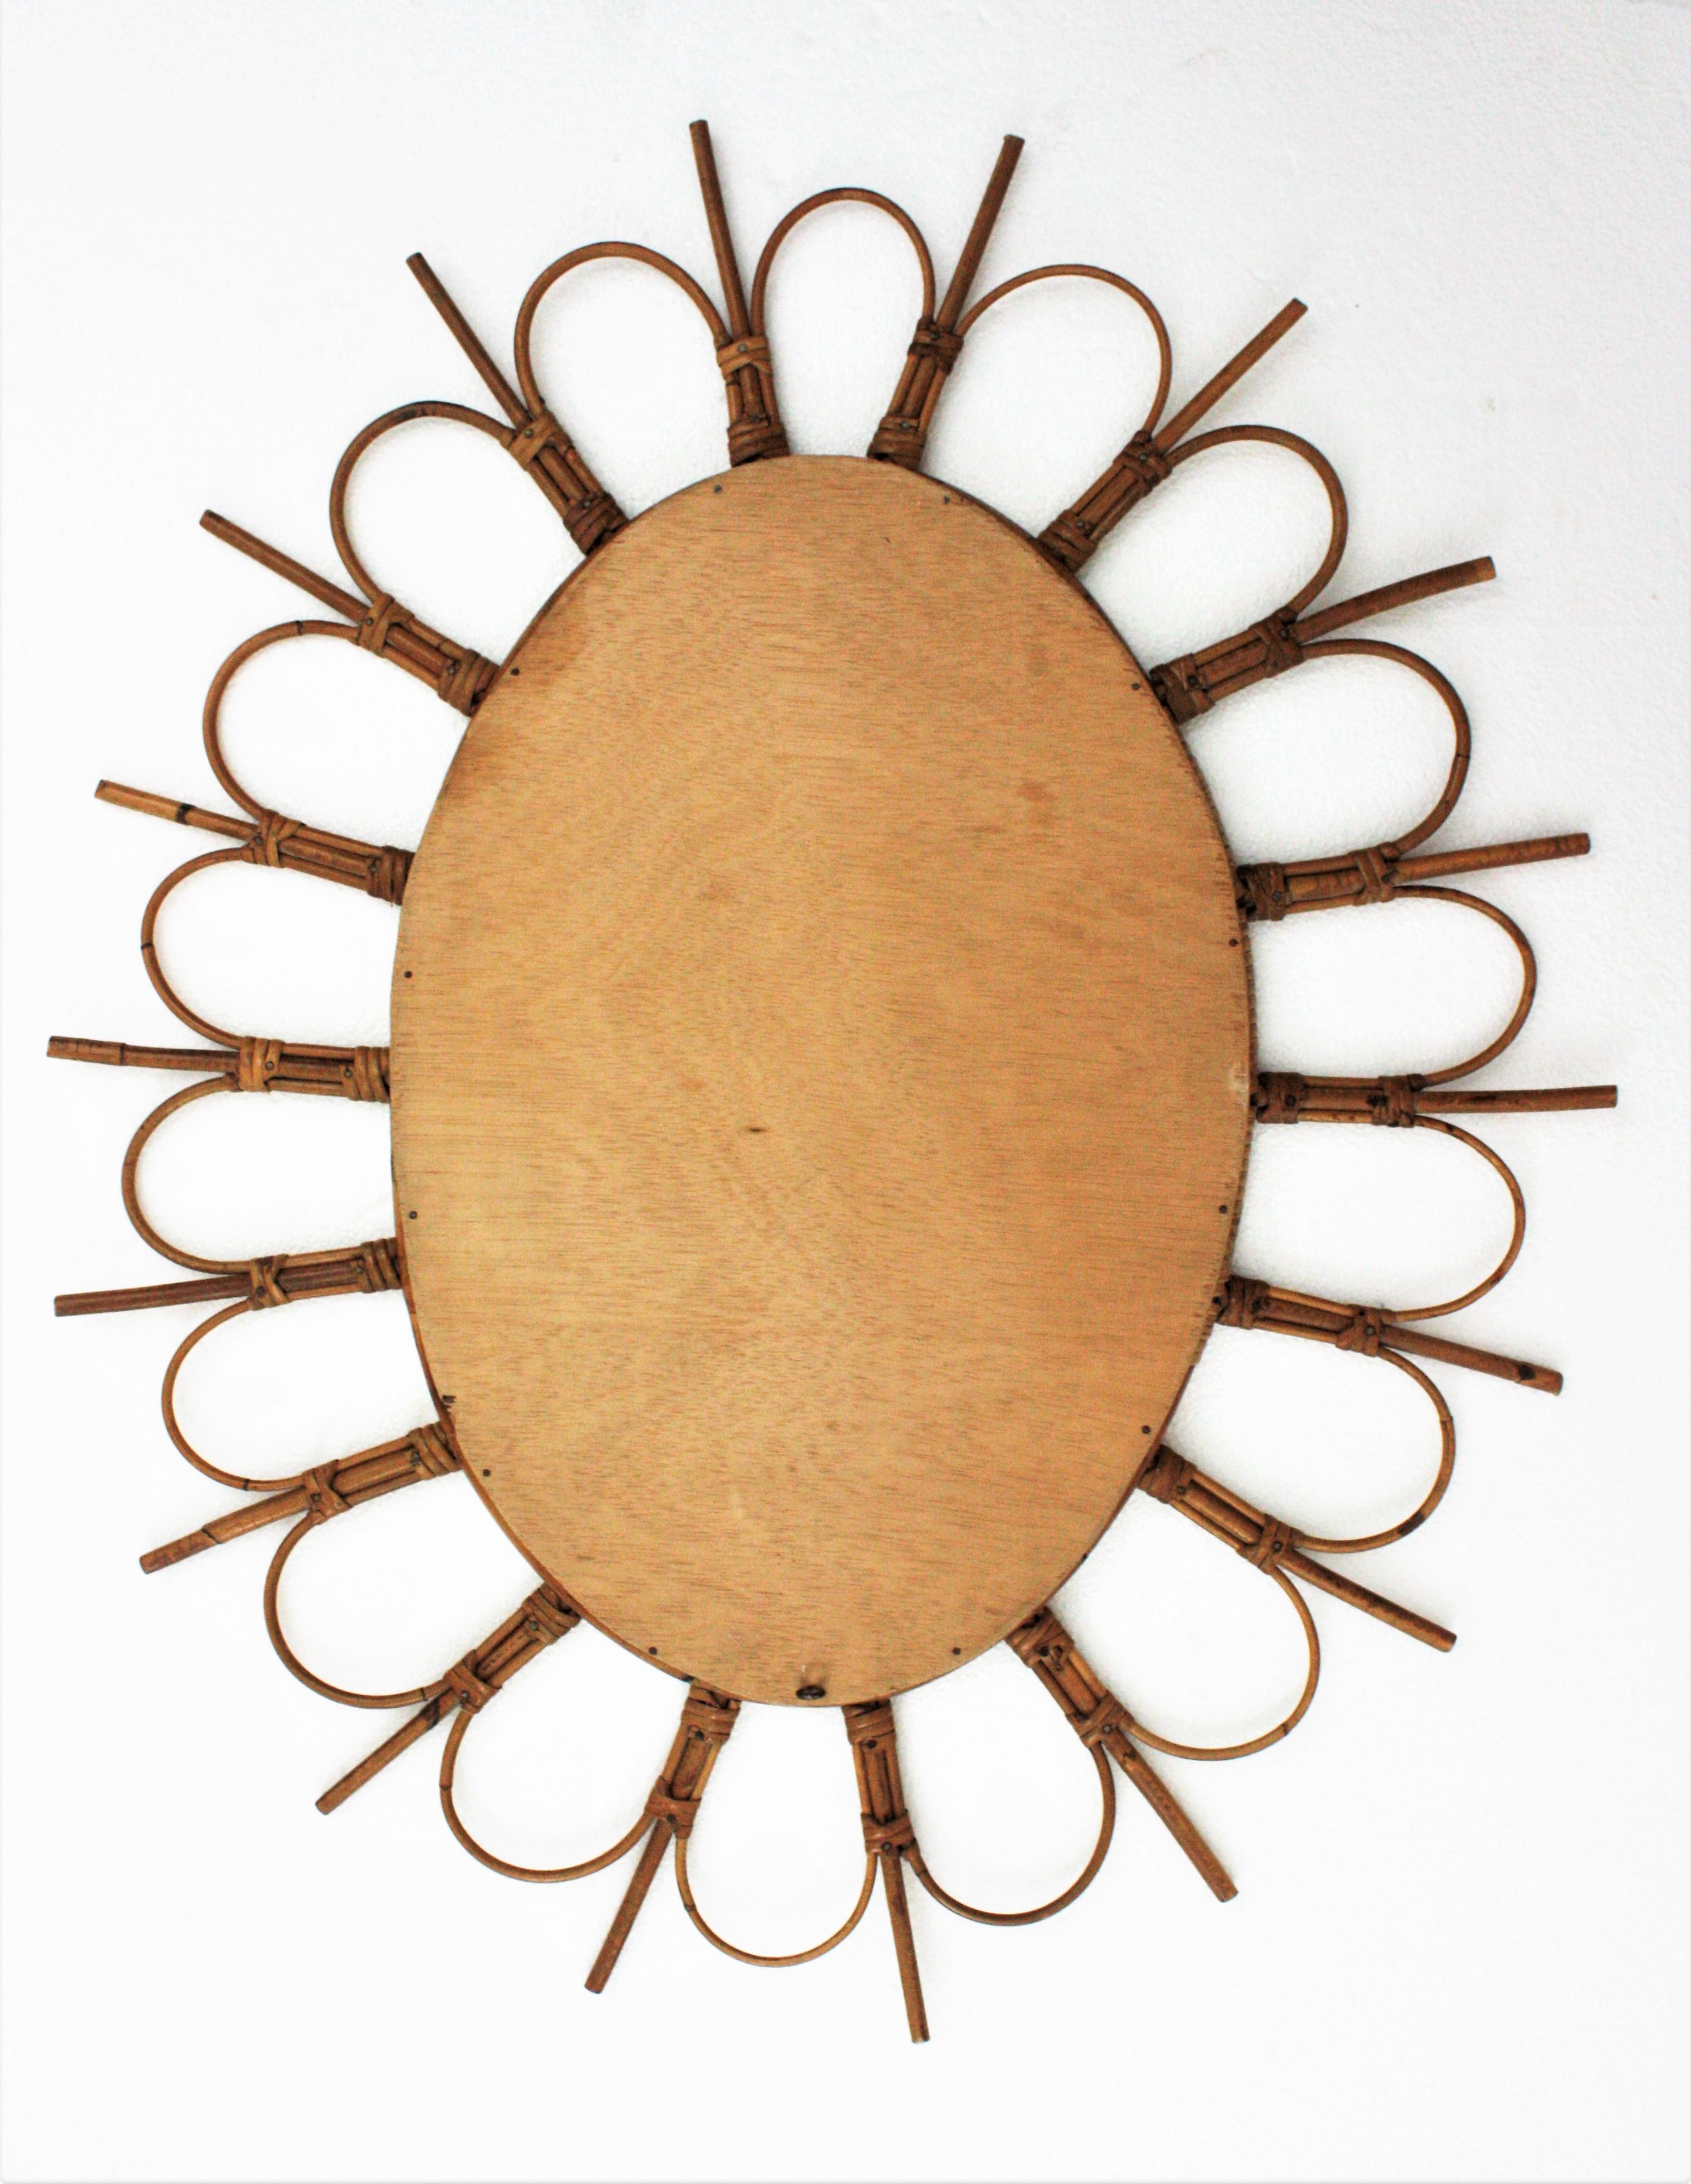 Wicker Rattan Oval Sunburst Flower Mirror from France, 1960s For Sale